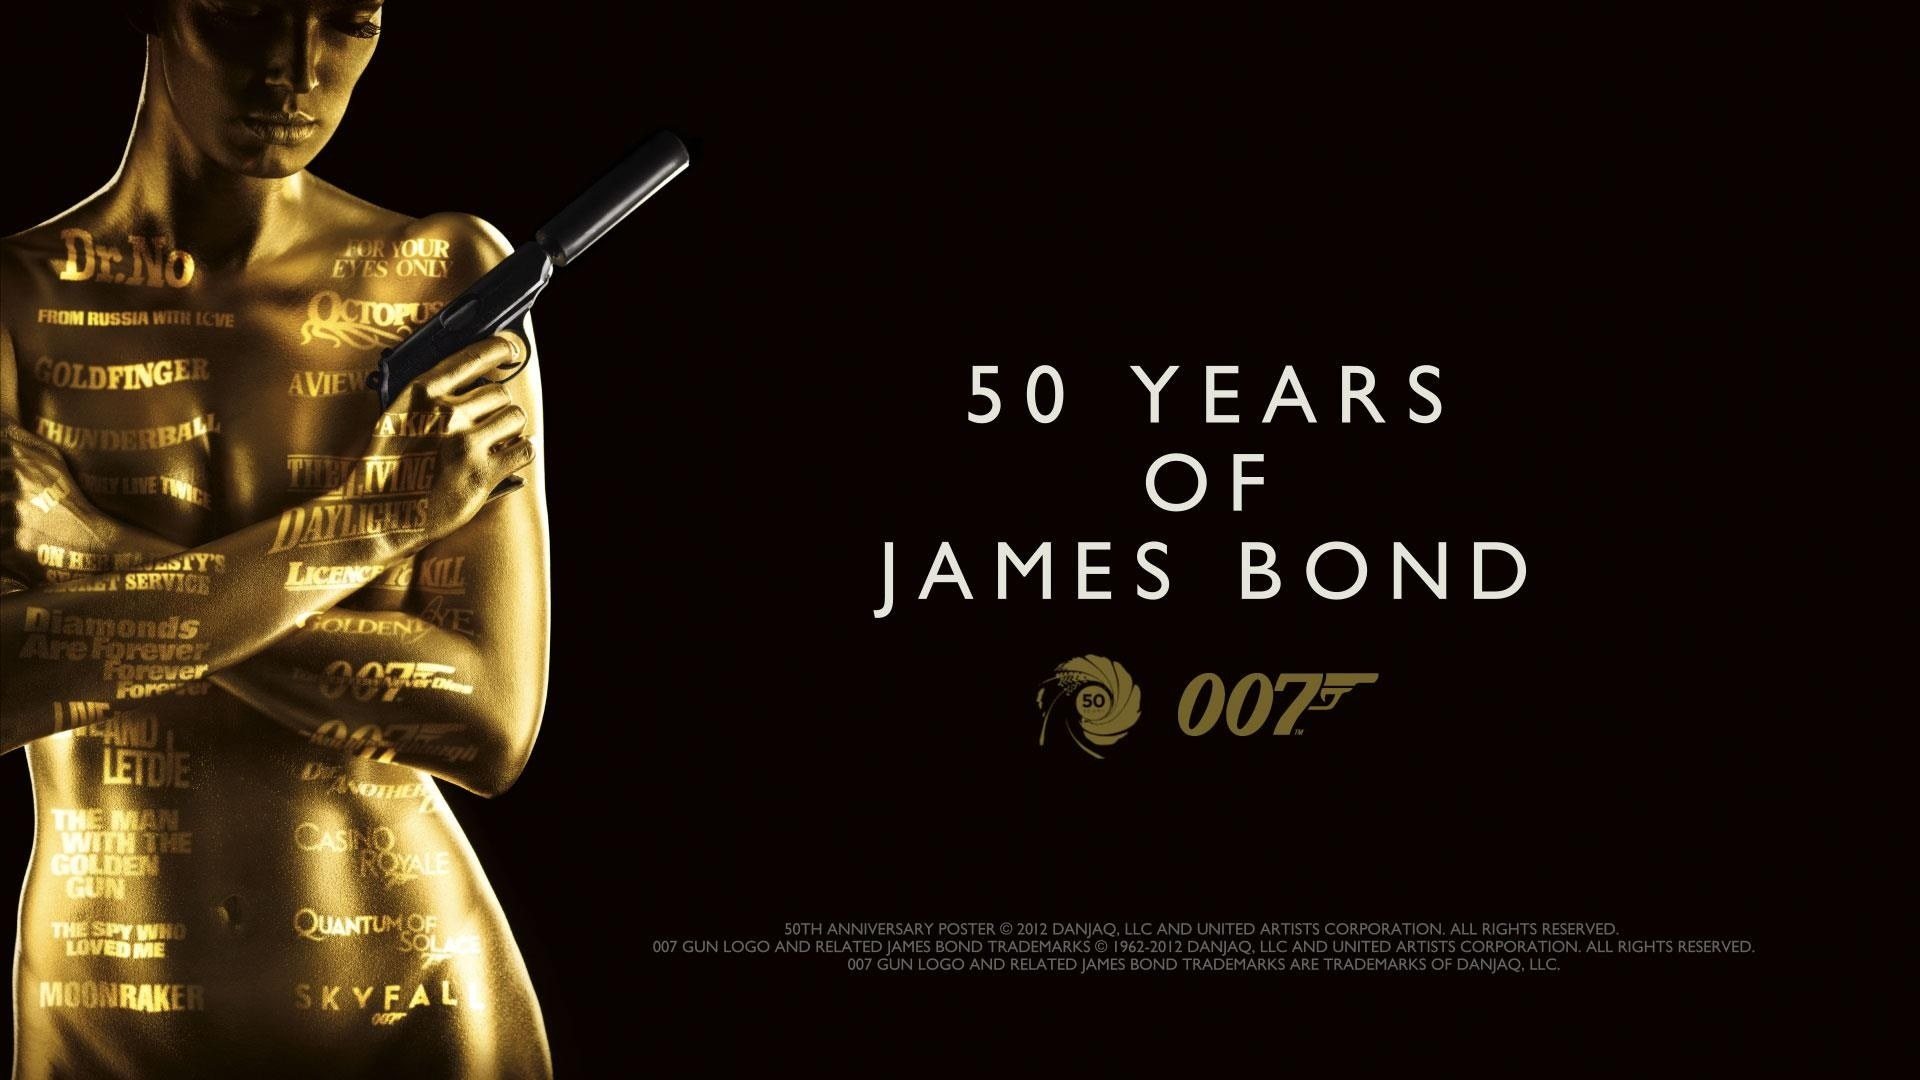  James Bond Cellphone FHD pic